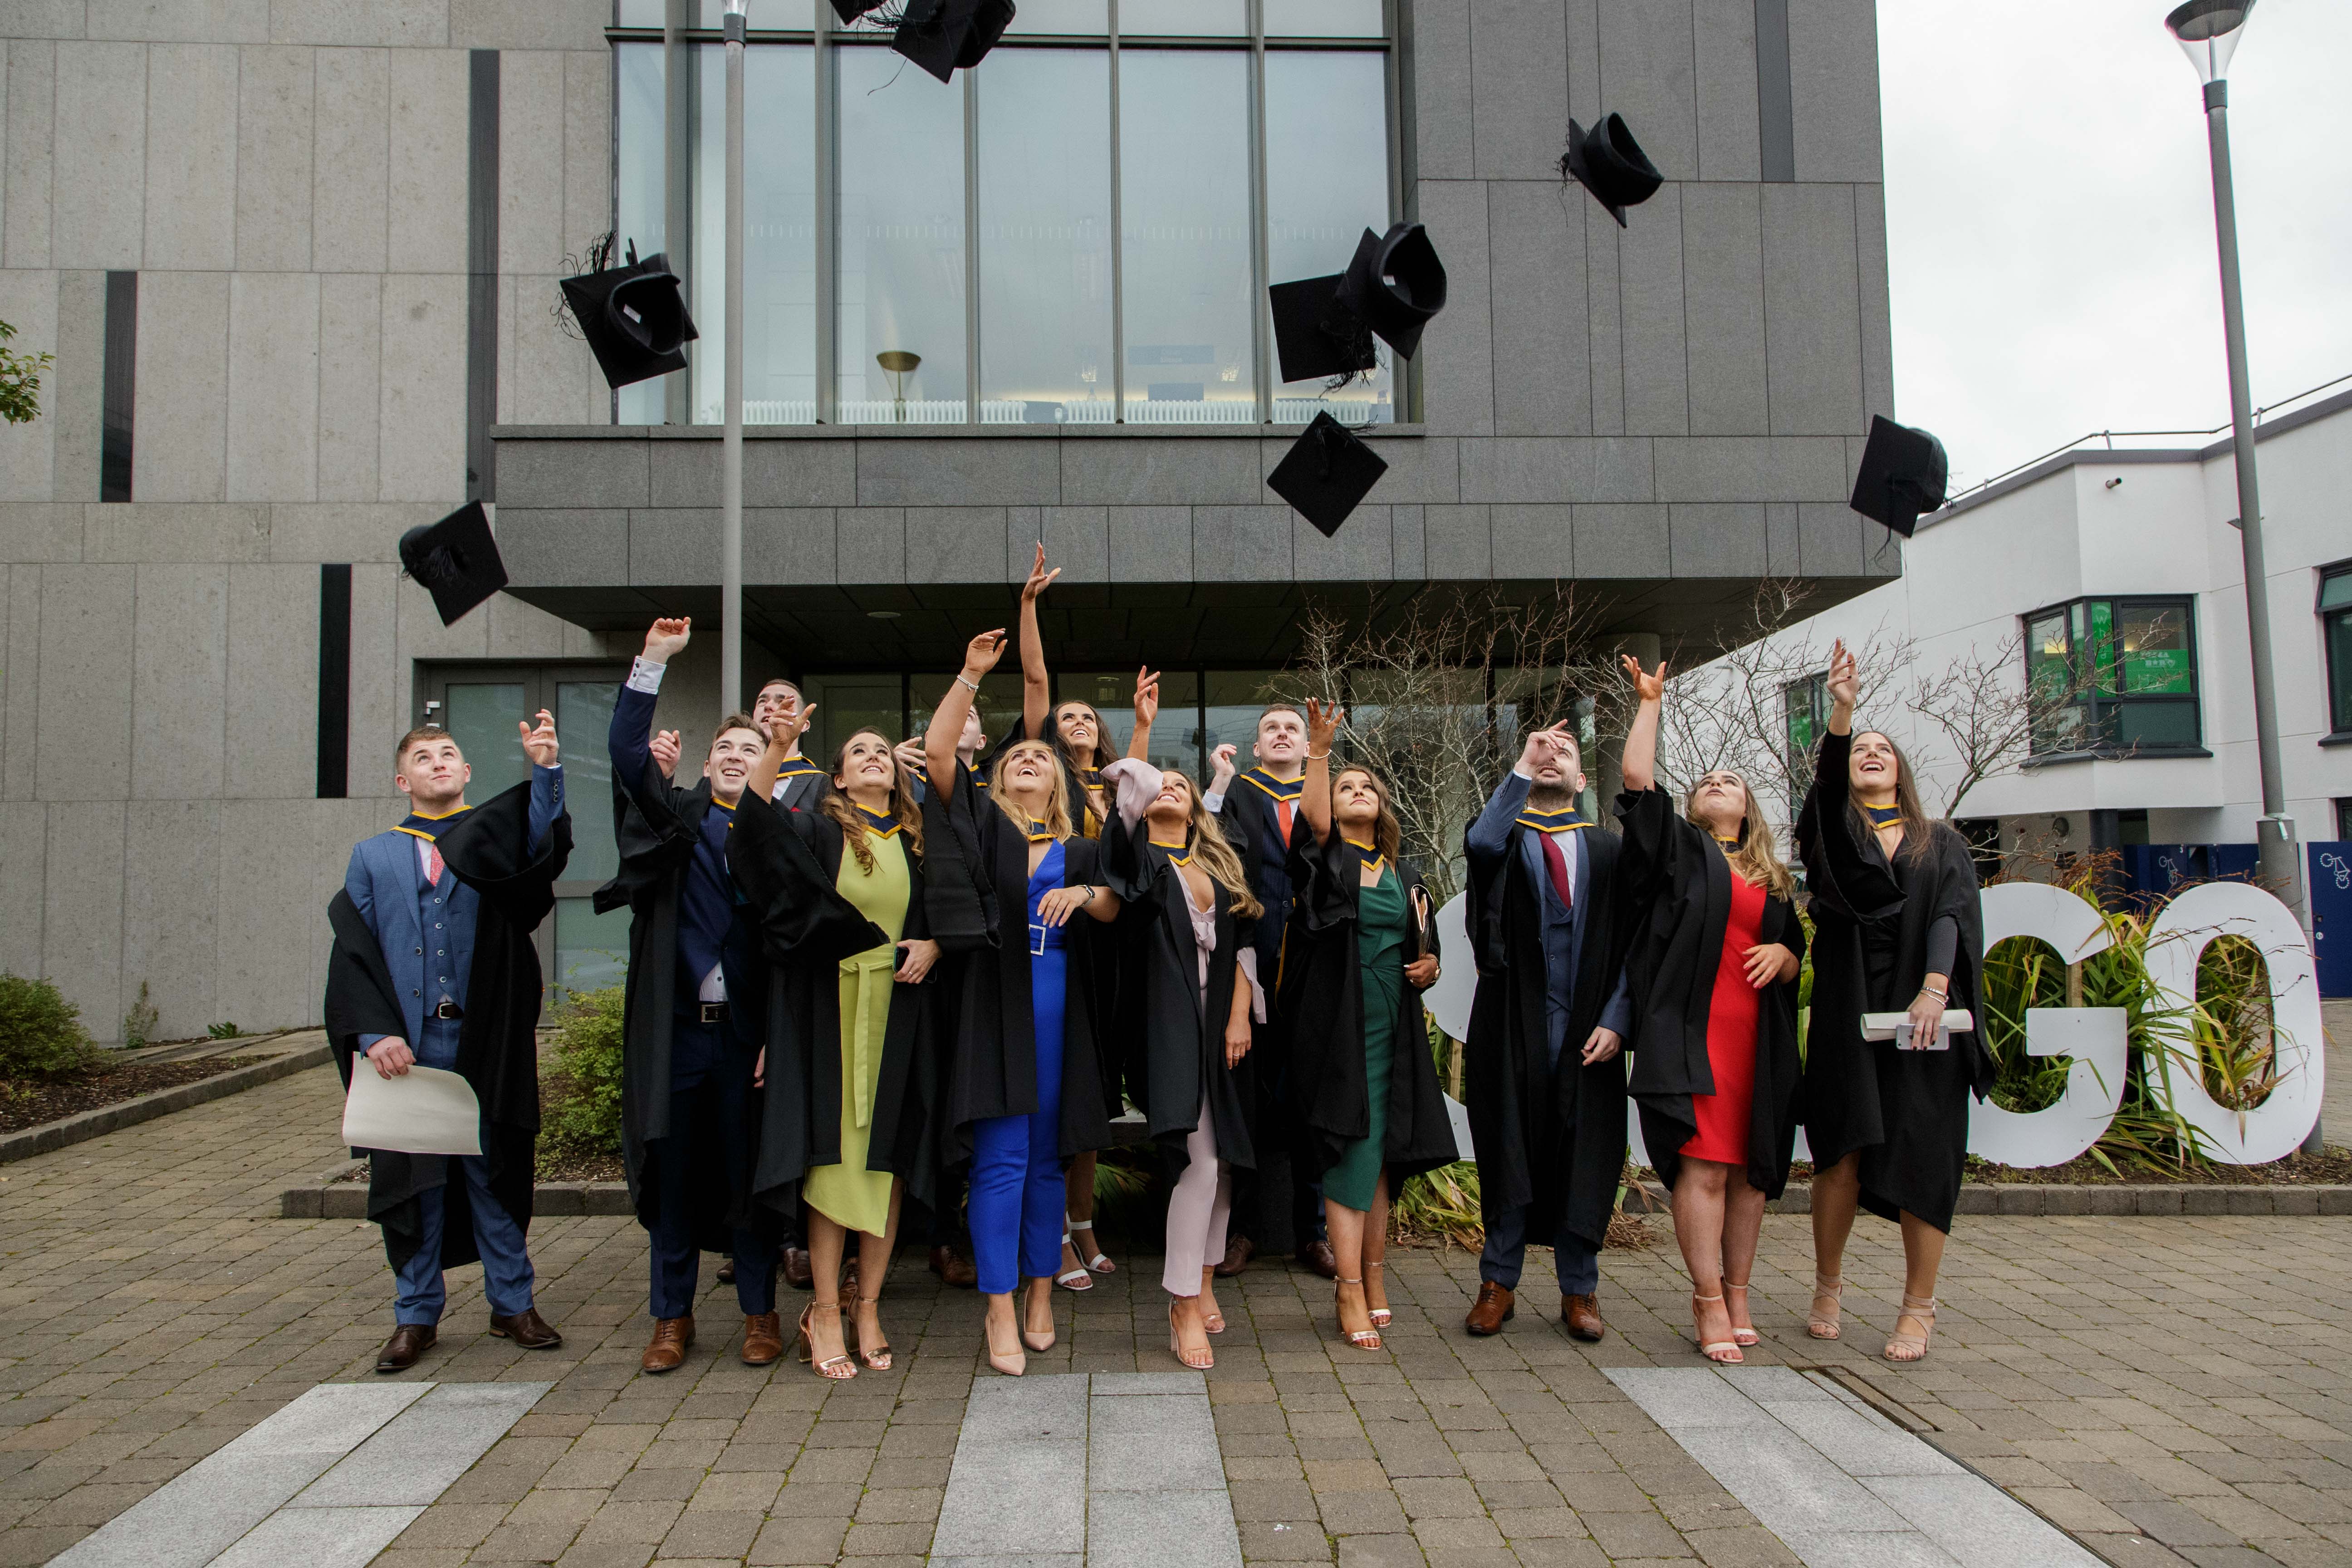 Students graduating from ATU Sligo campus throwing their graduation caps in the air